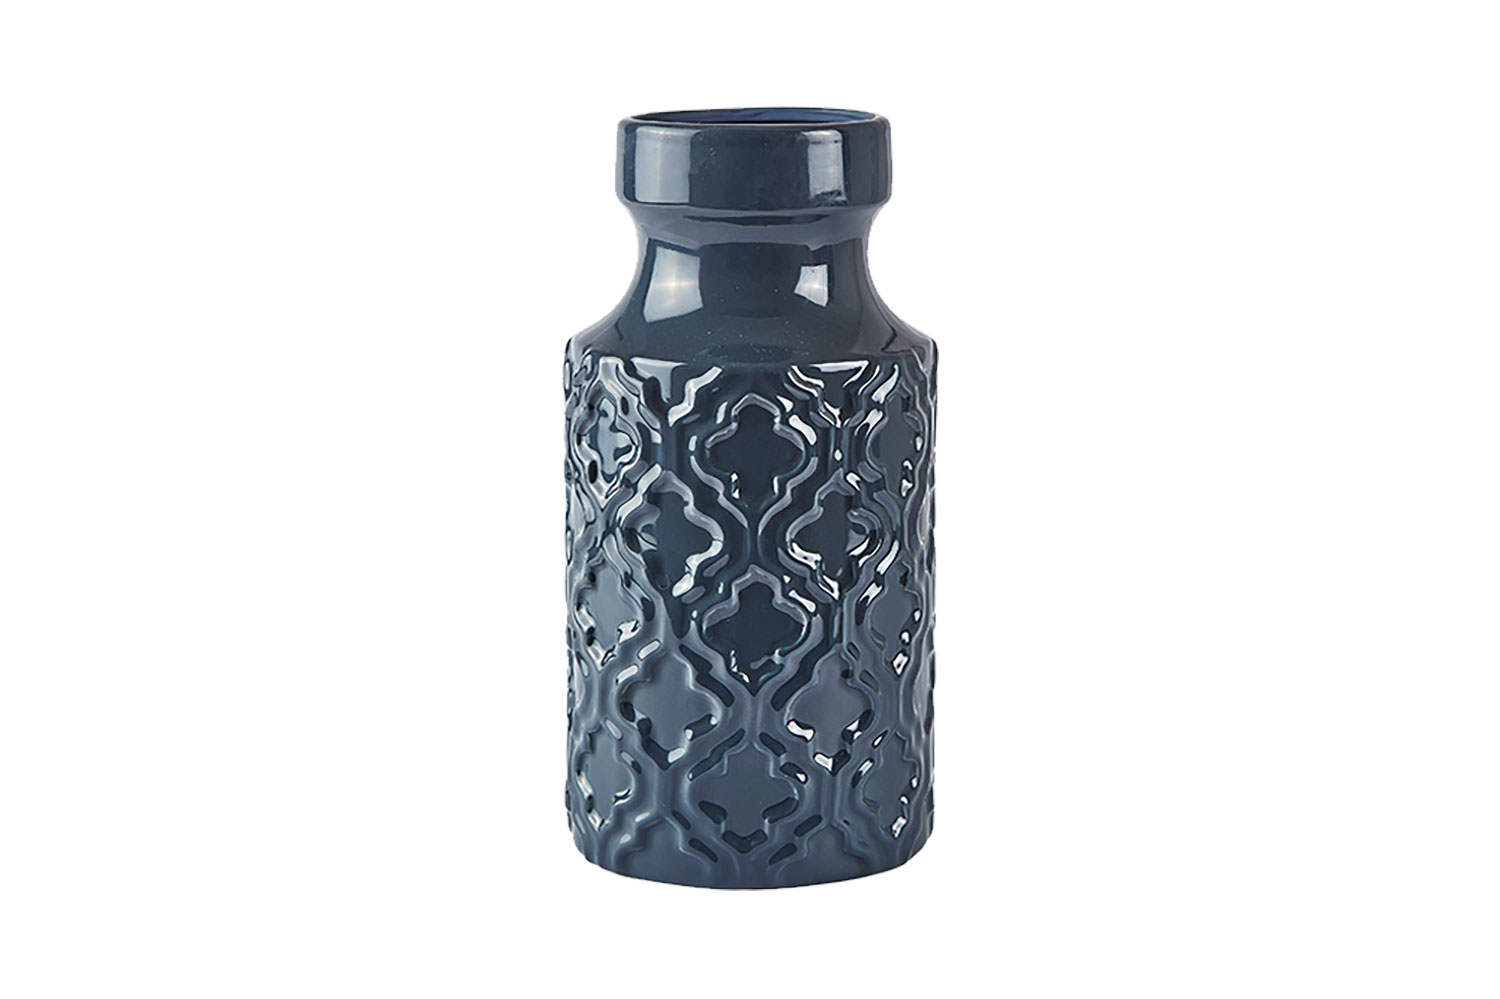 Blue ceramic vase pattern